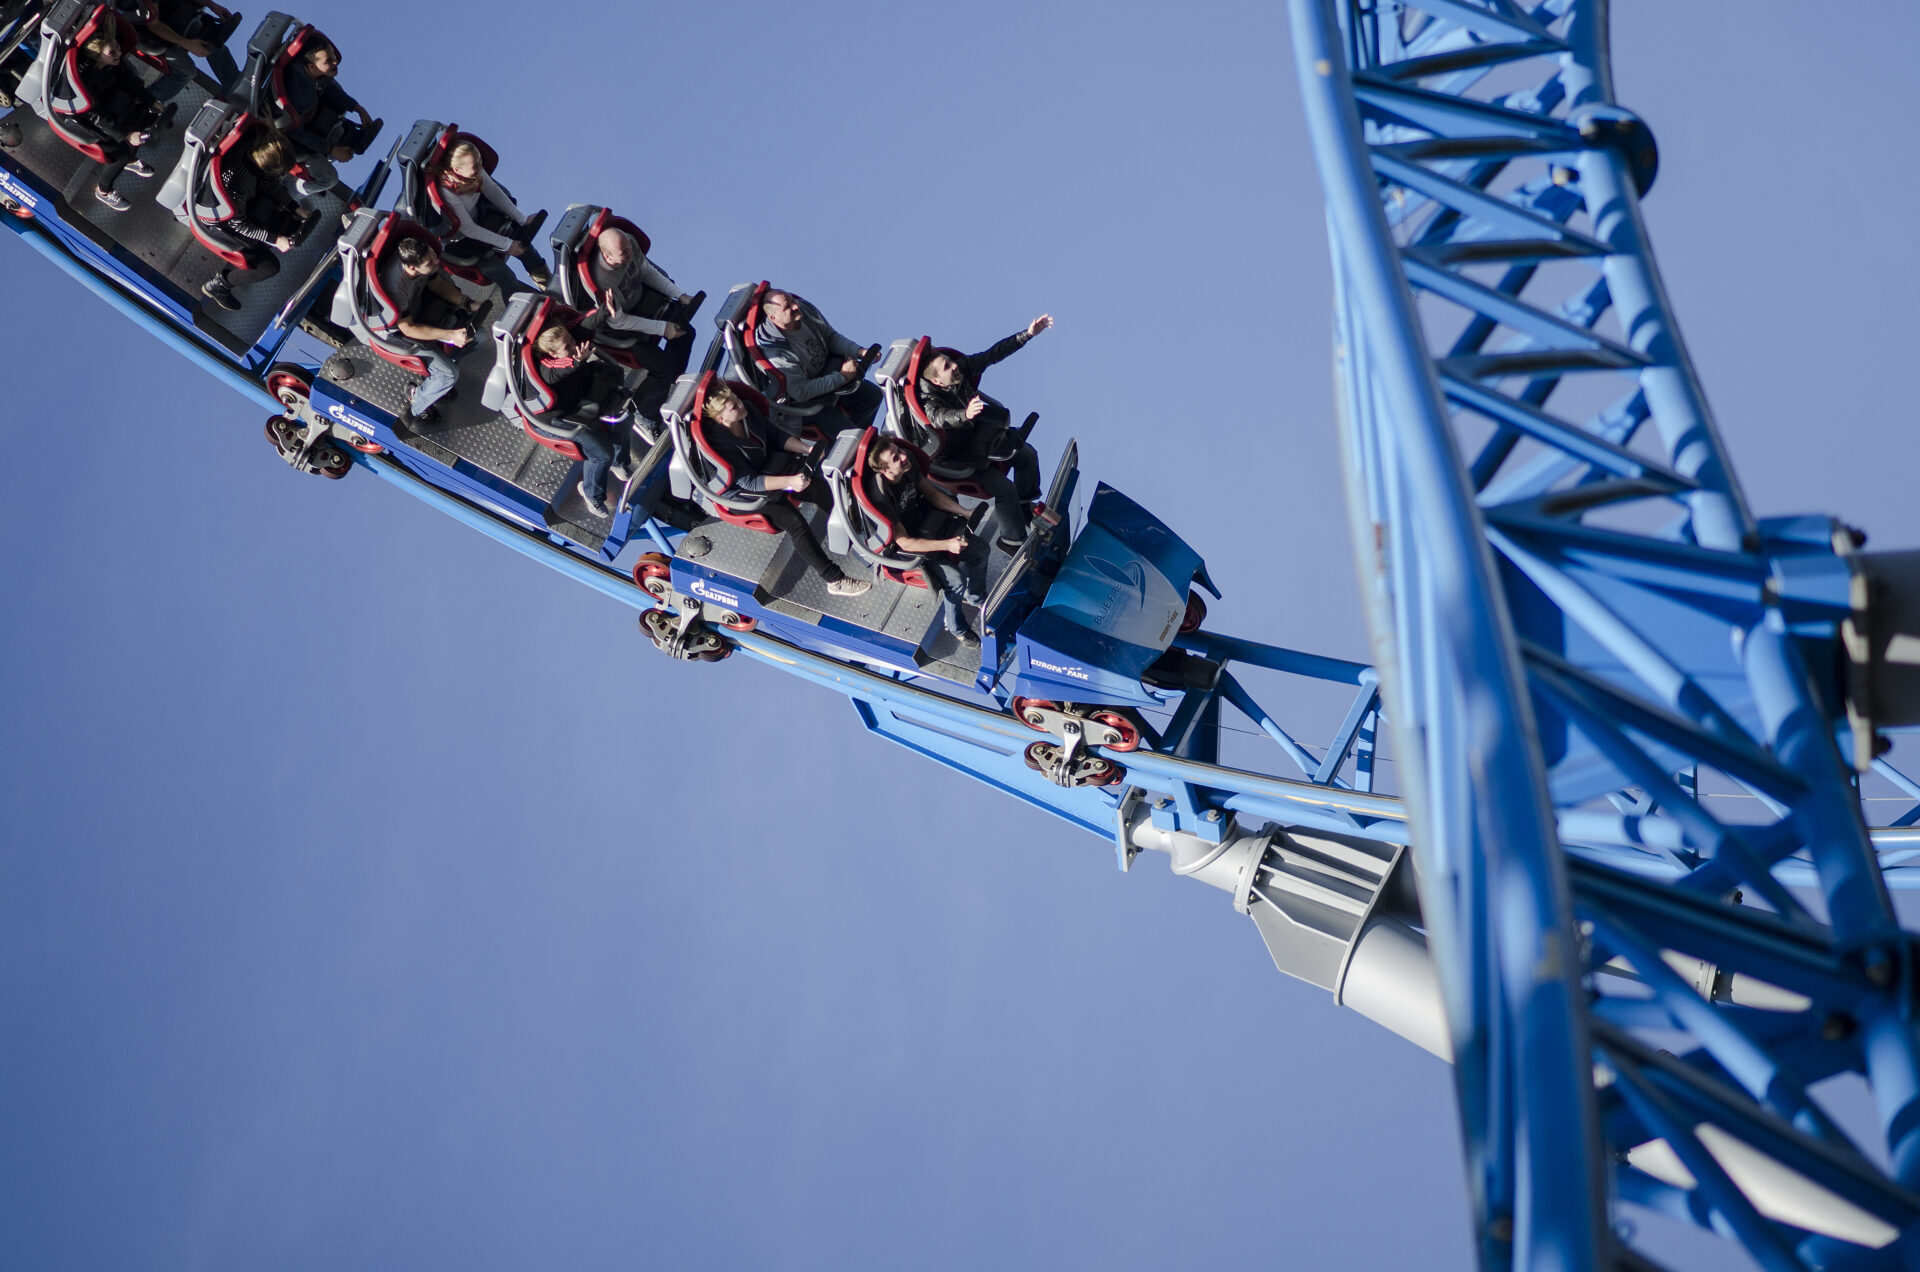 Europa Park Blue Fire Rollercoaster loop Inversion Rust Germany amusement park themepark 07